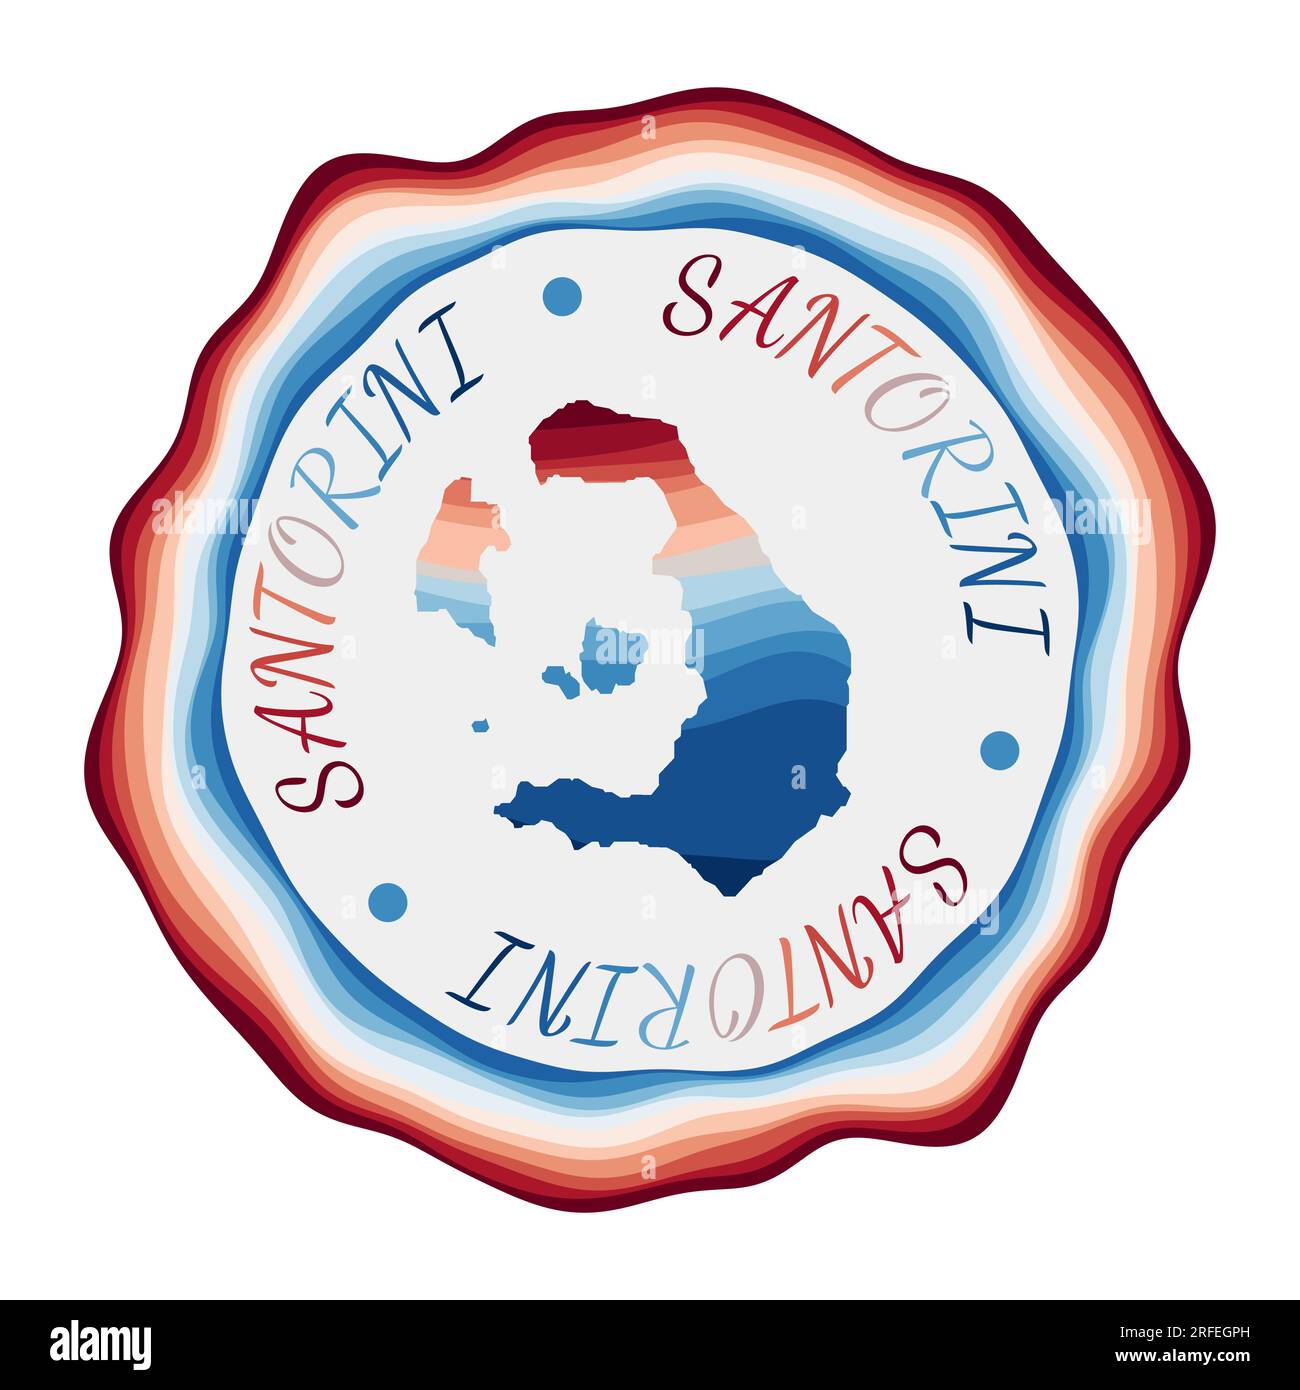 Santorini badge. Map of the island with beautiful geometric waves and vibrant red blue frame. Vivid round Santorini logo. Vector illustration. Stock Vector